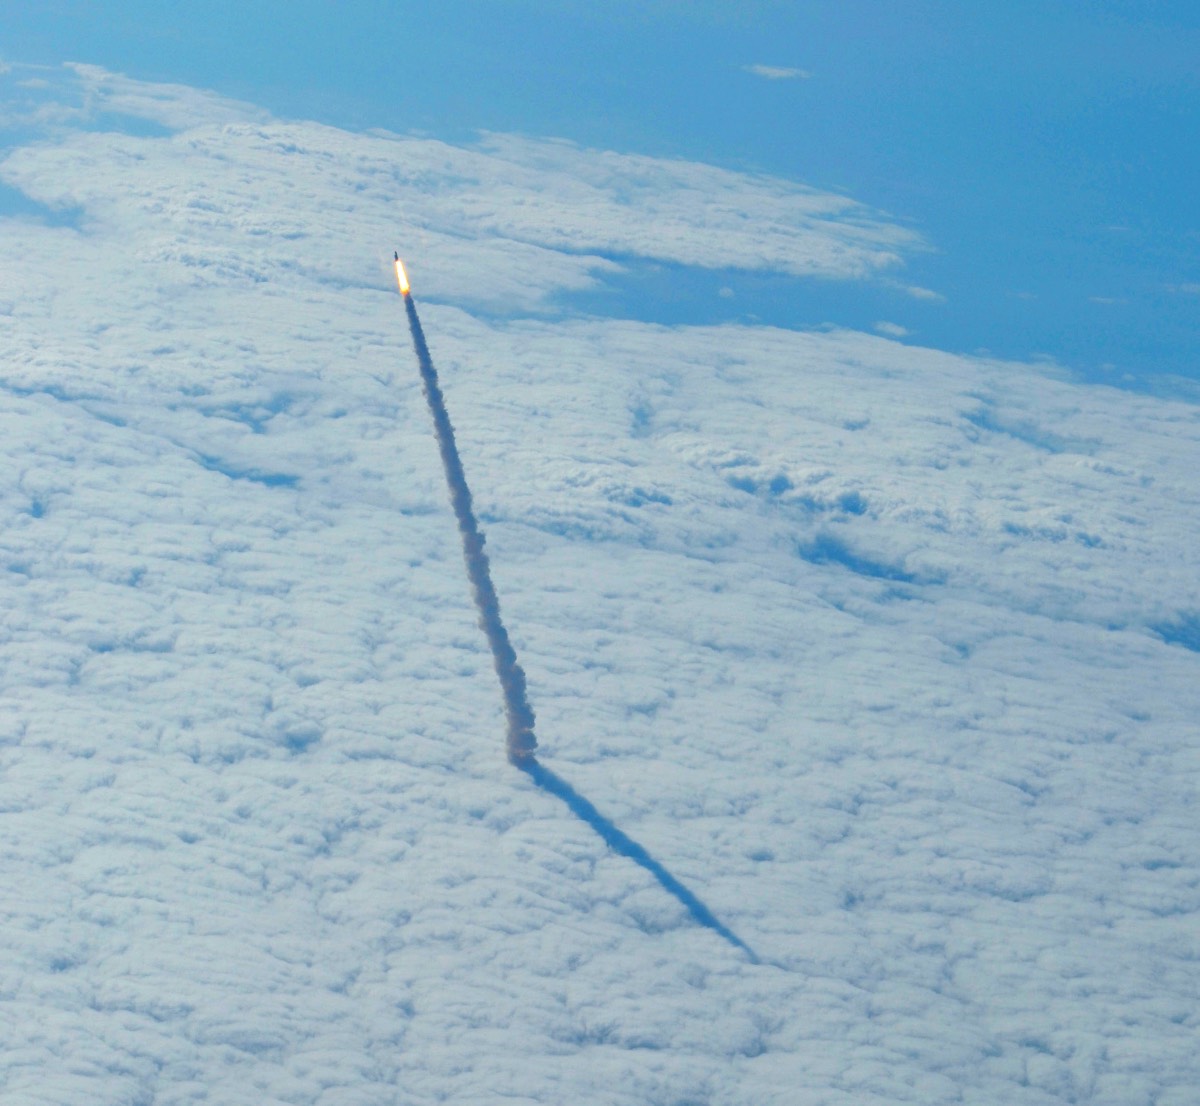 Shuttle Endeavour rising through the clouds